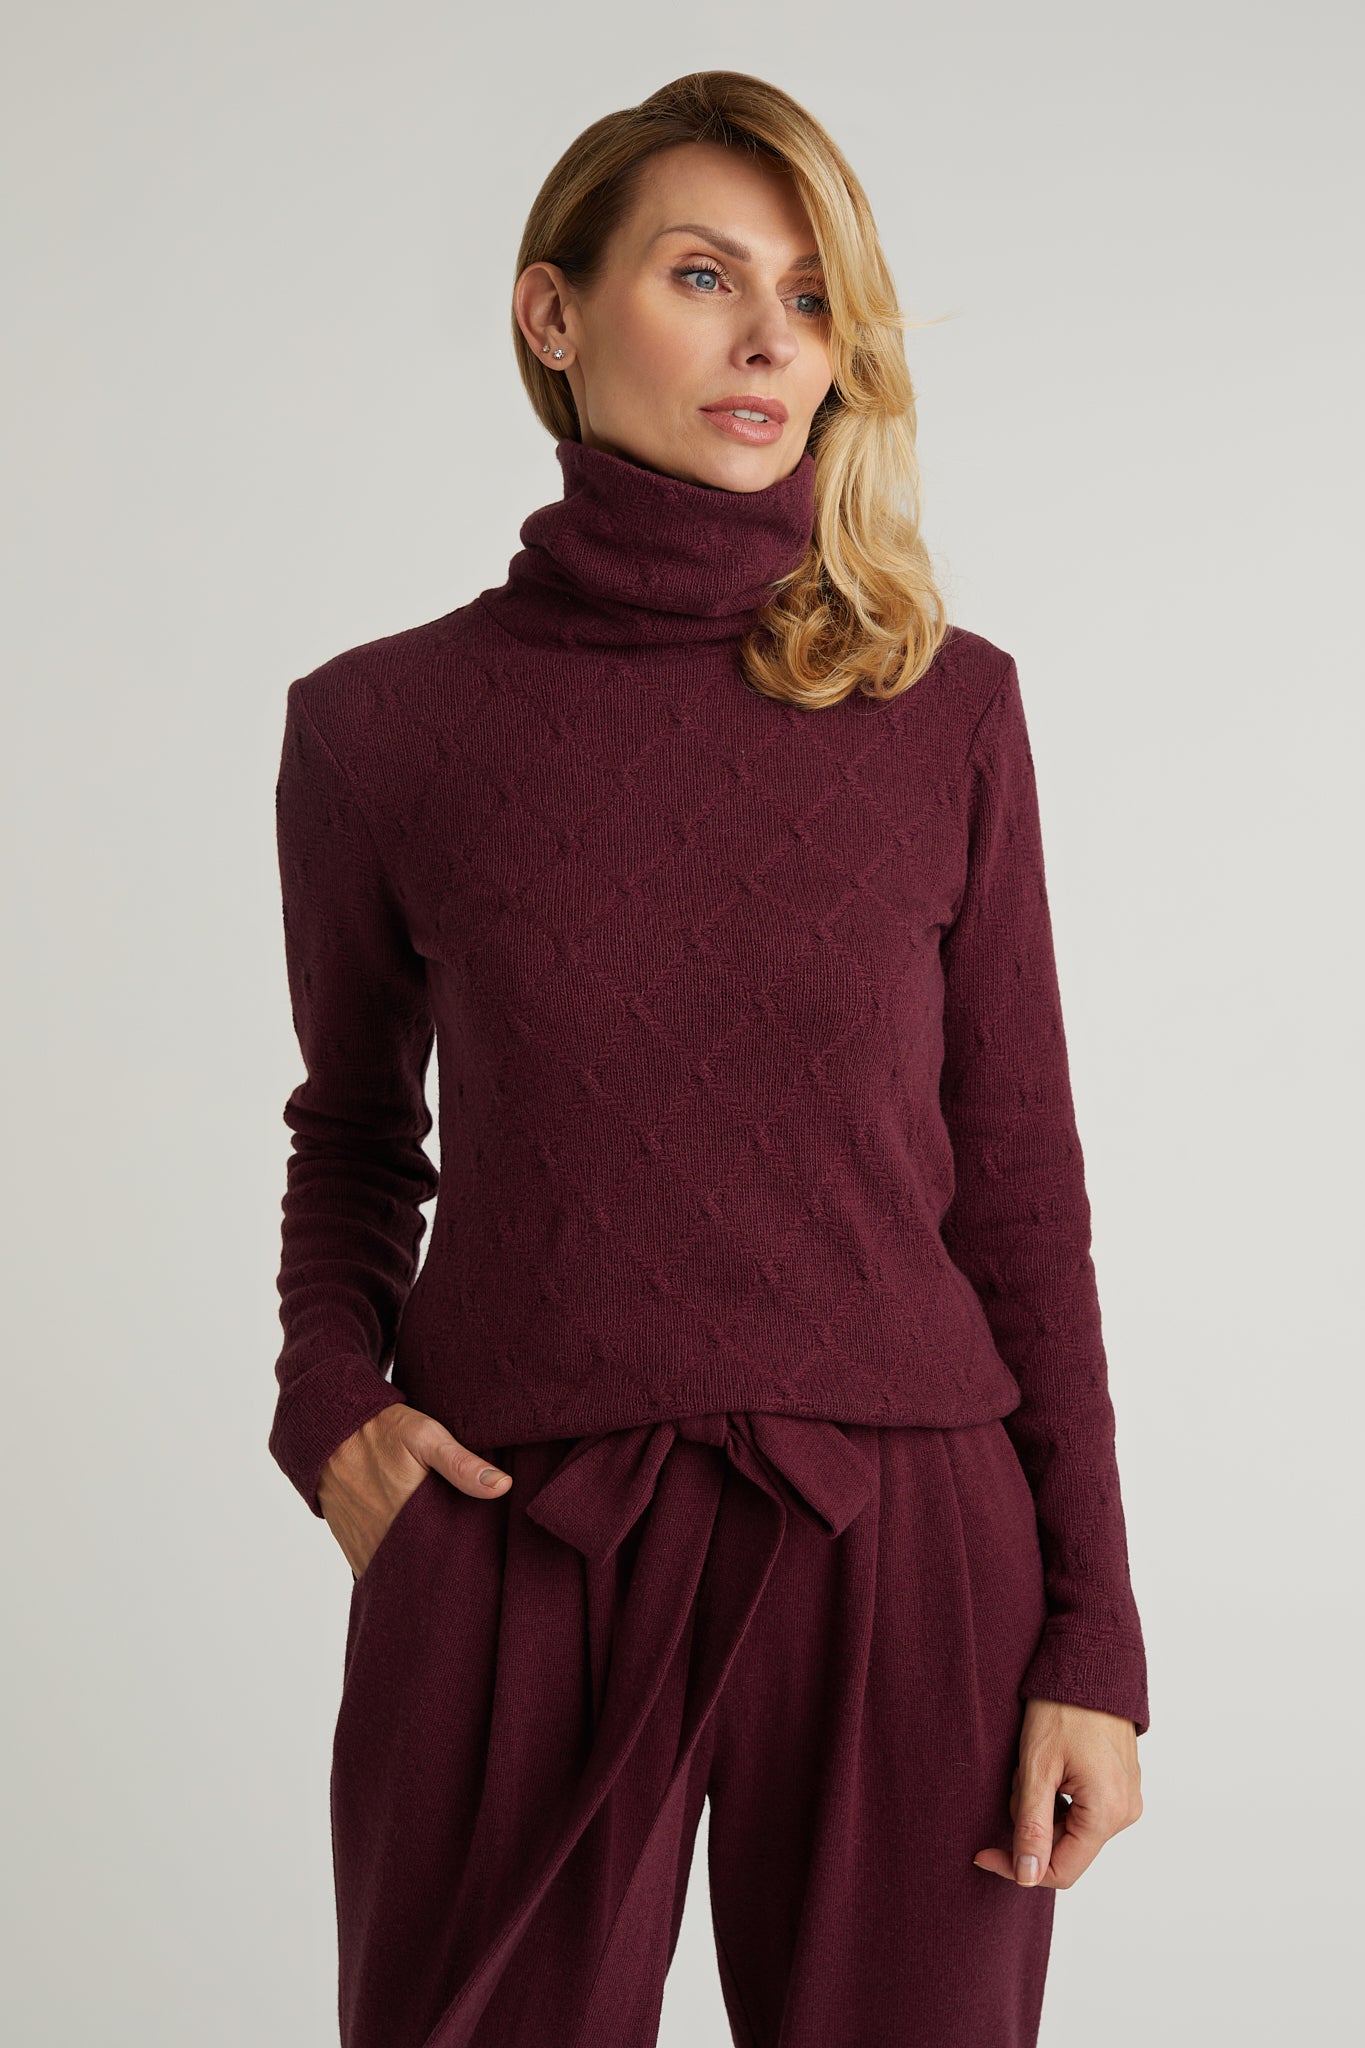 Gaudium Turtleneck Sweater With Pattern in Burgundy